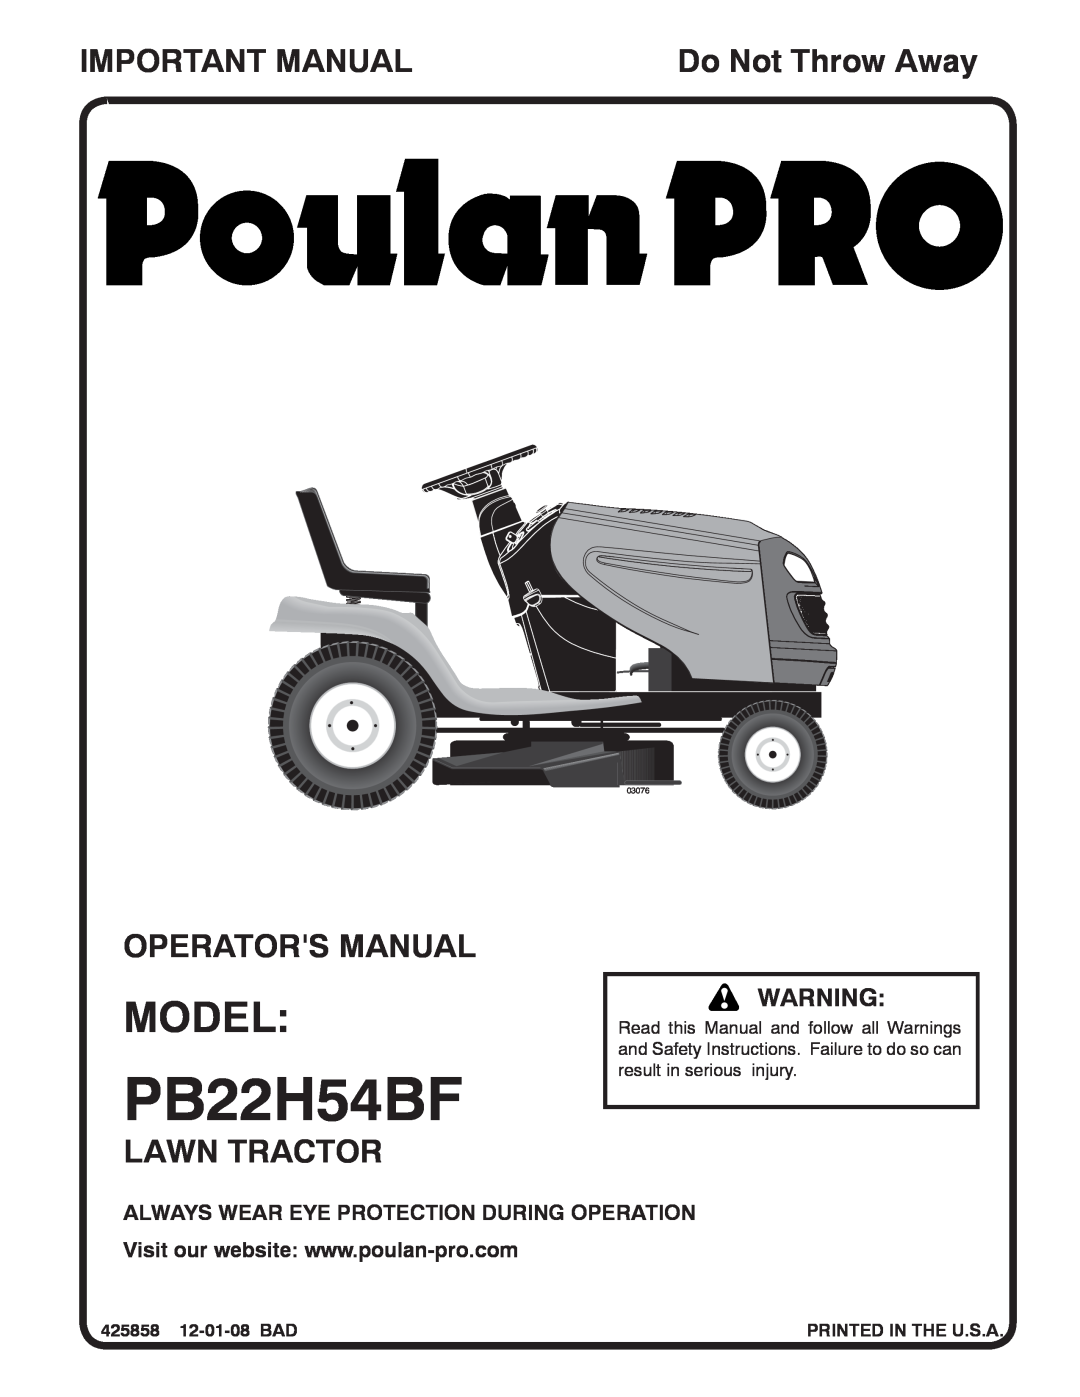 Poulan 425858 manual Model, Important Manual, Operators Manual, Lawn Tractor, Do Not Throw Away, PB22H54BF, 03076 